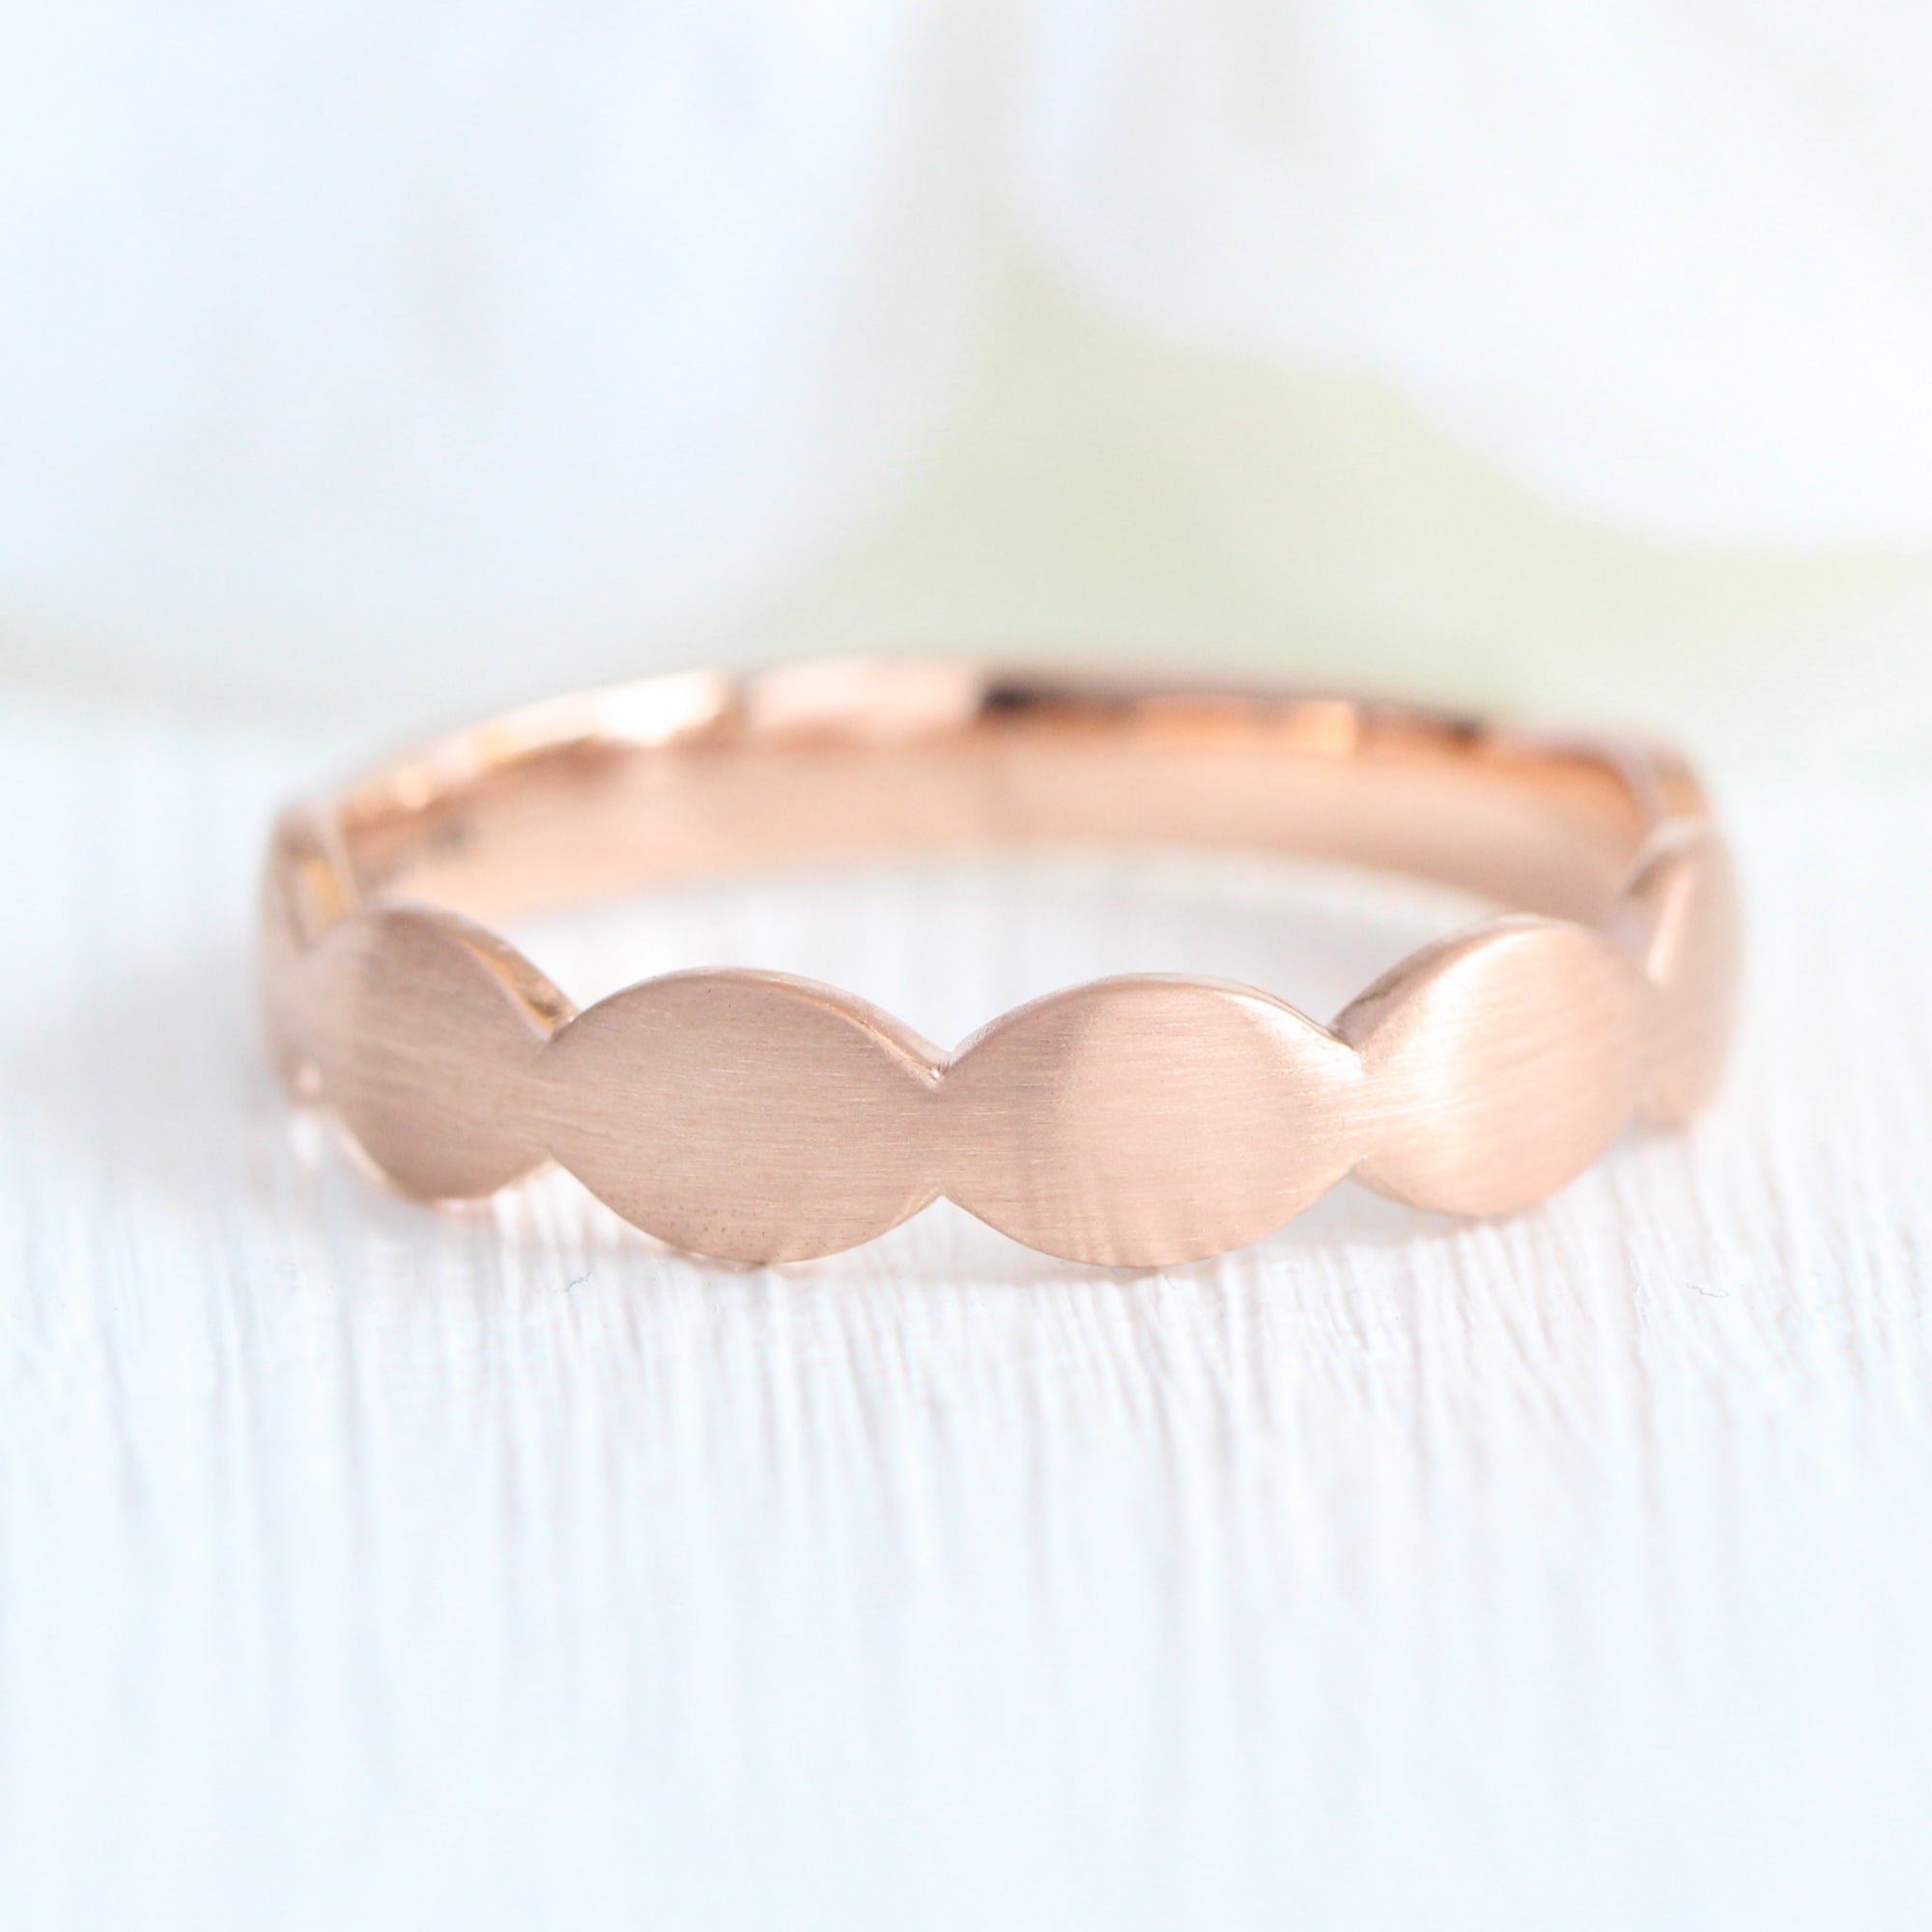 Unique gender neutral wedding ring, scalloped wedding band rose gold matte wedding band la more design jewelry